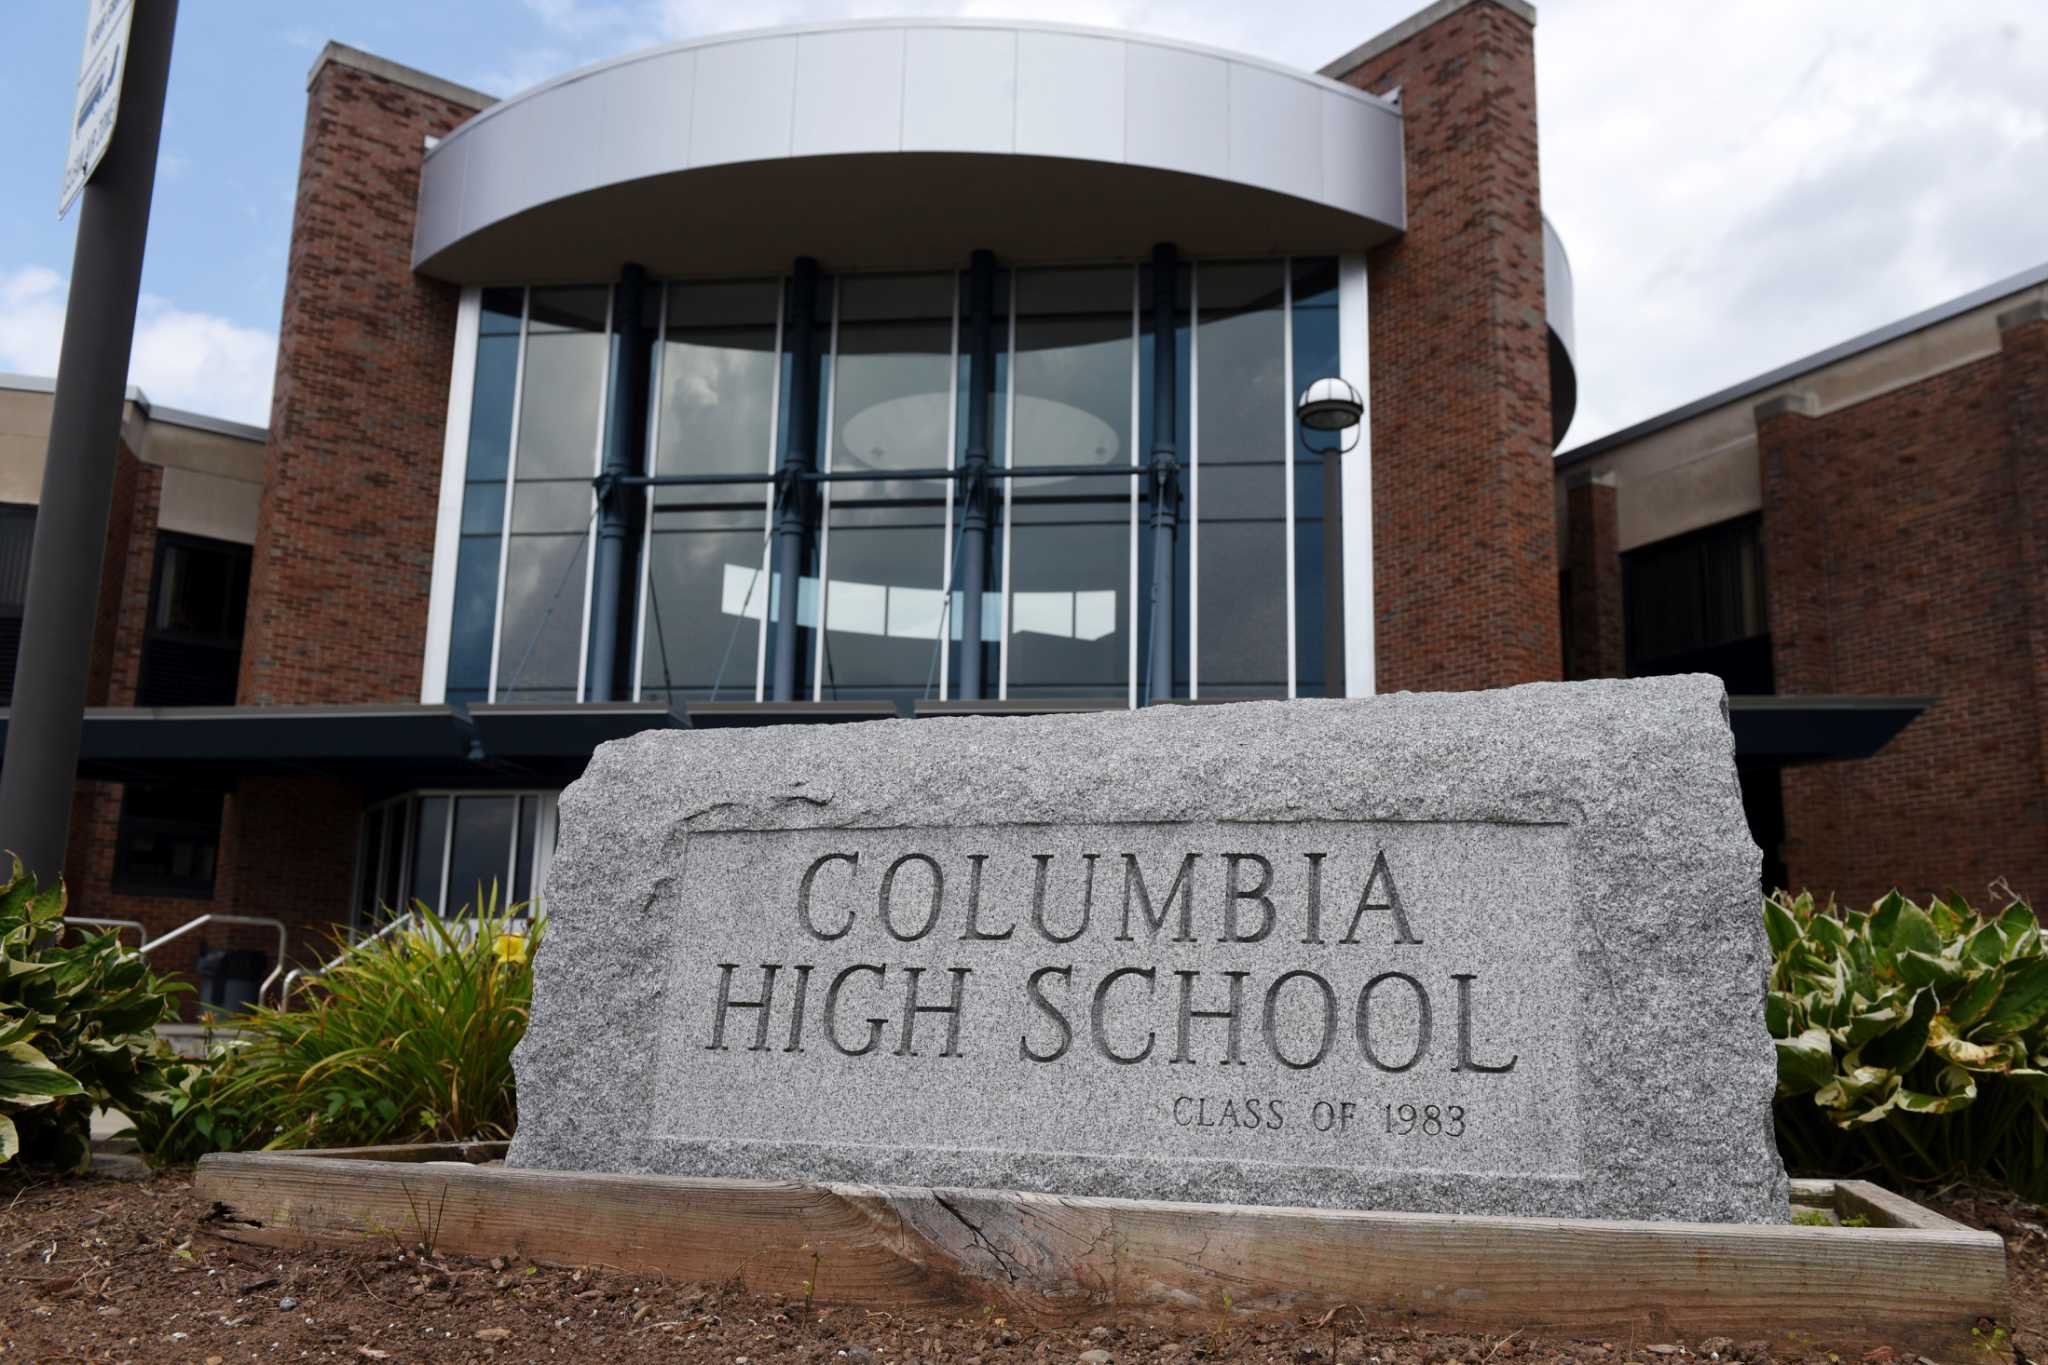 About Columbia High School - Columbia High School